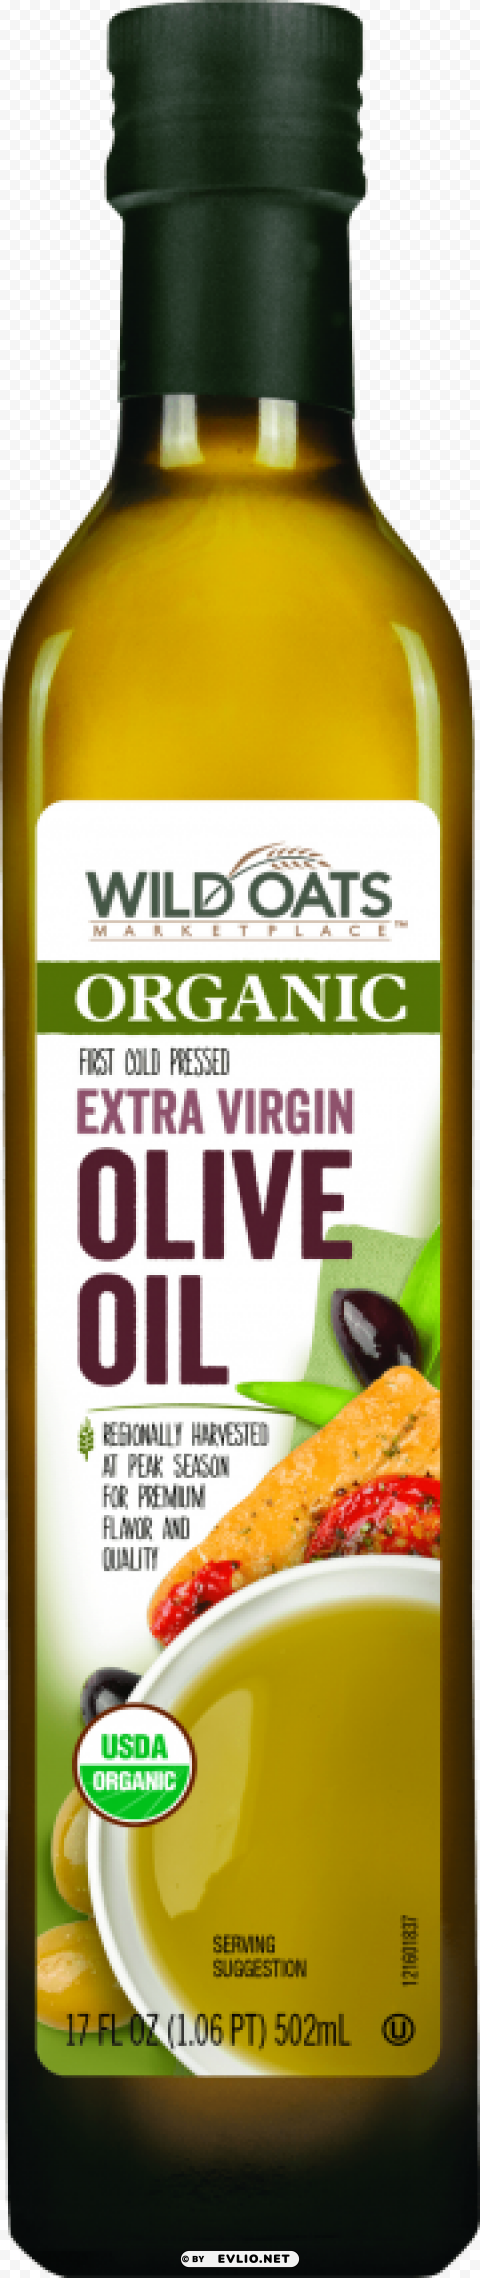 olive oil Transparent PNG images collection